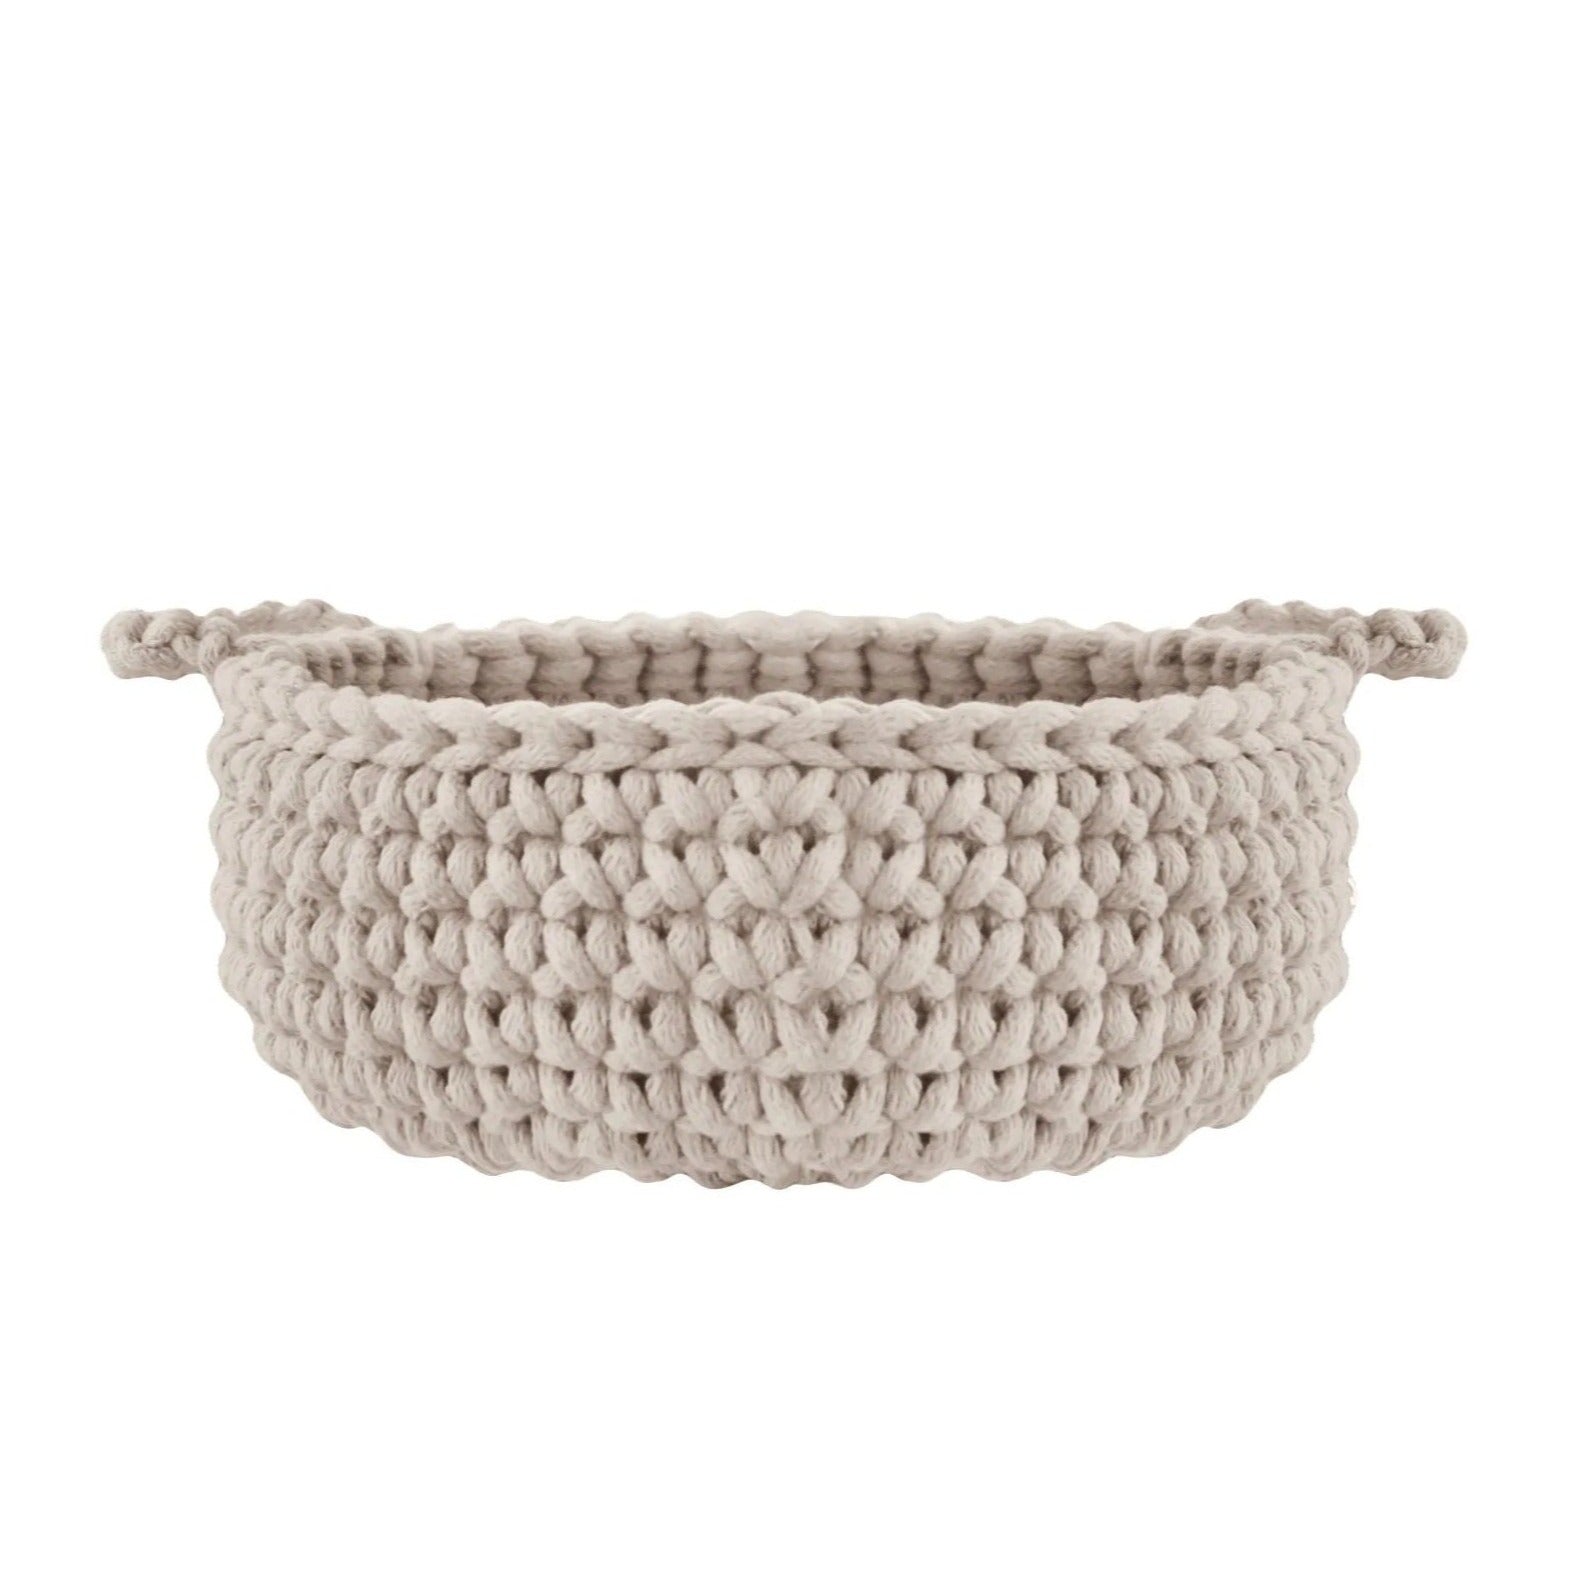 Zuri House Crochet Flat Basket - Small - Beige